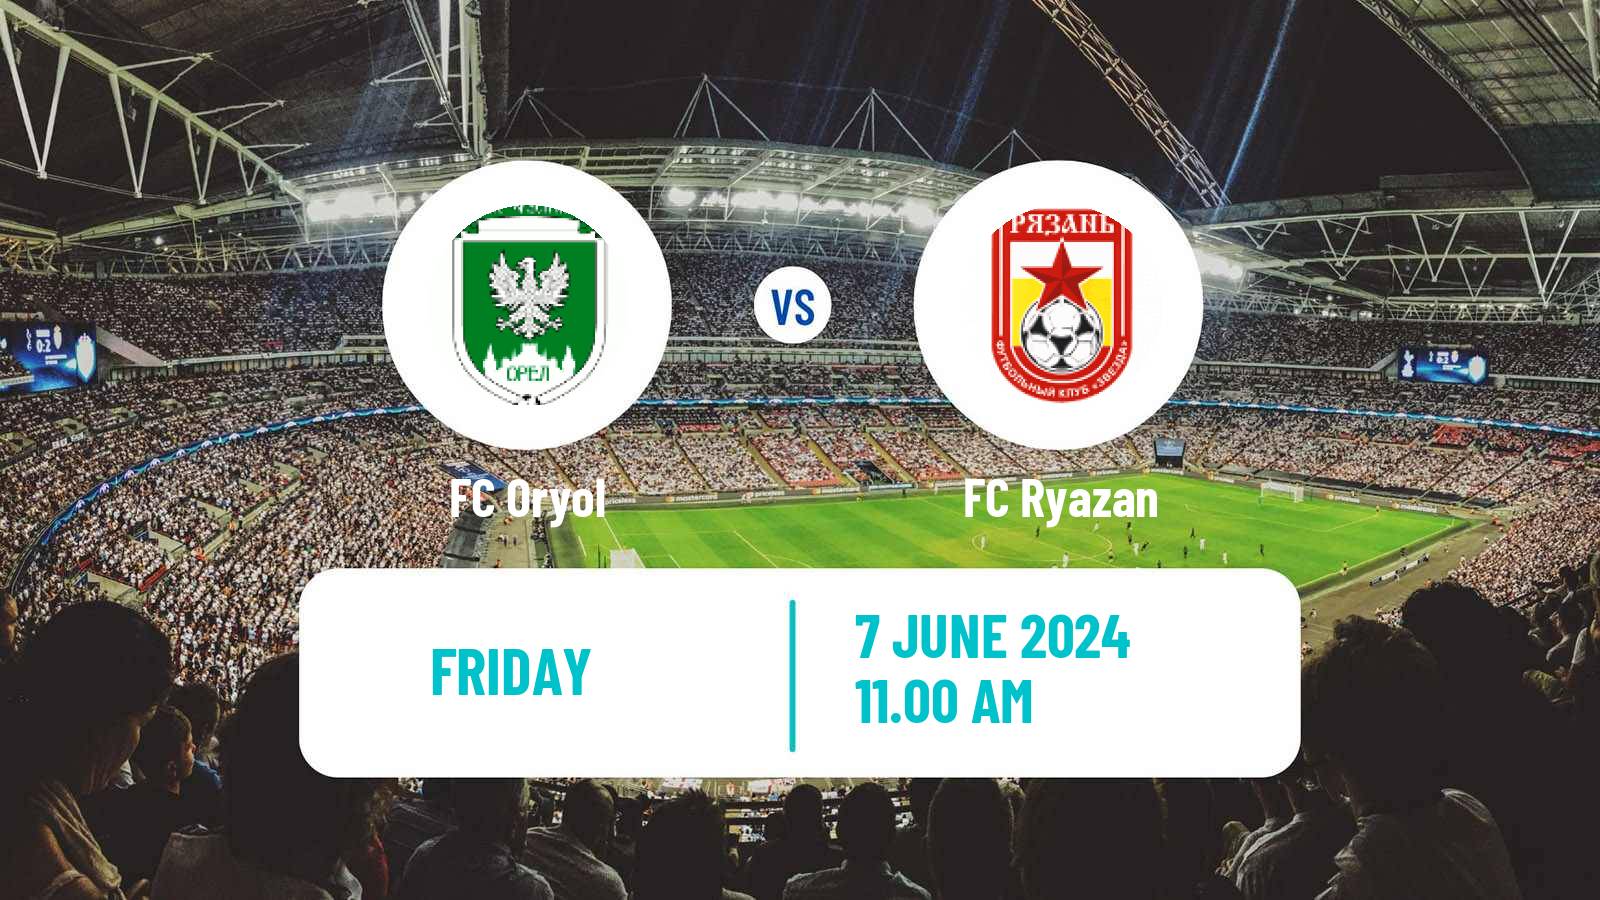 Soccer FNL 2 Division B Group 3 Oryol - Ryazan